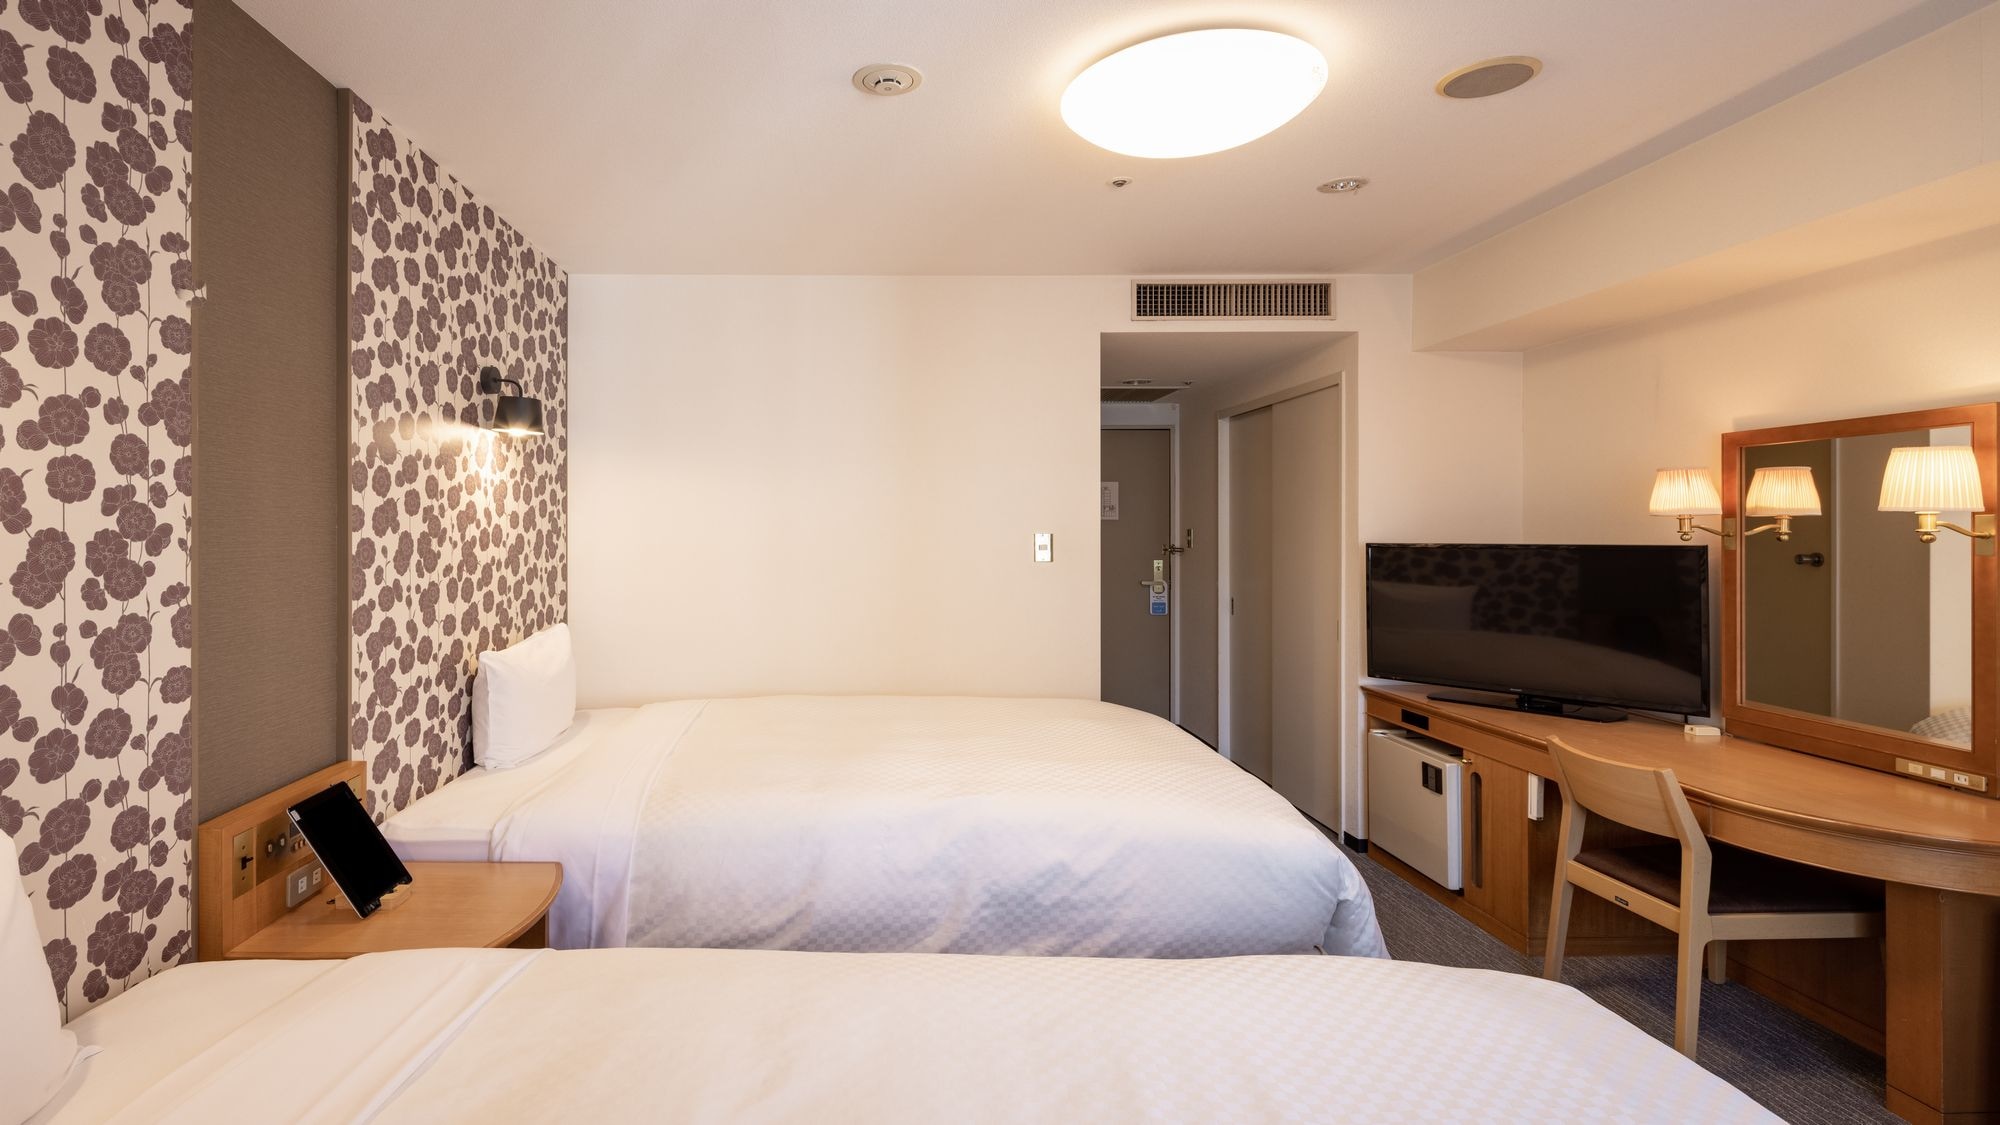 Comfort Twin Room Room size 20㎡, 2 semi-double beds (140cm width)